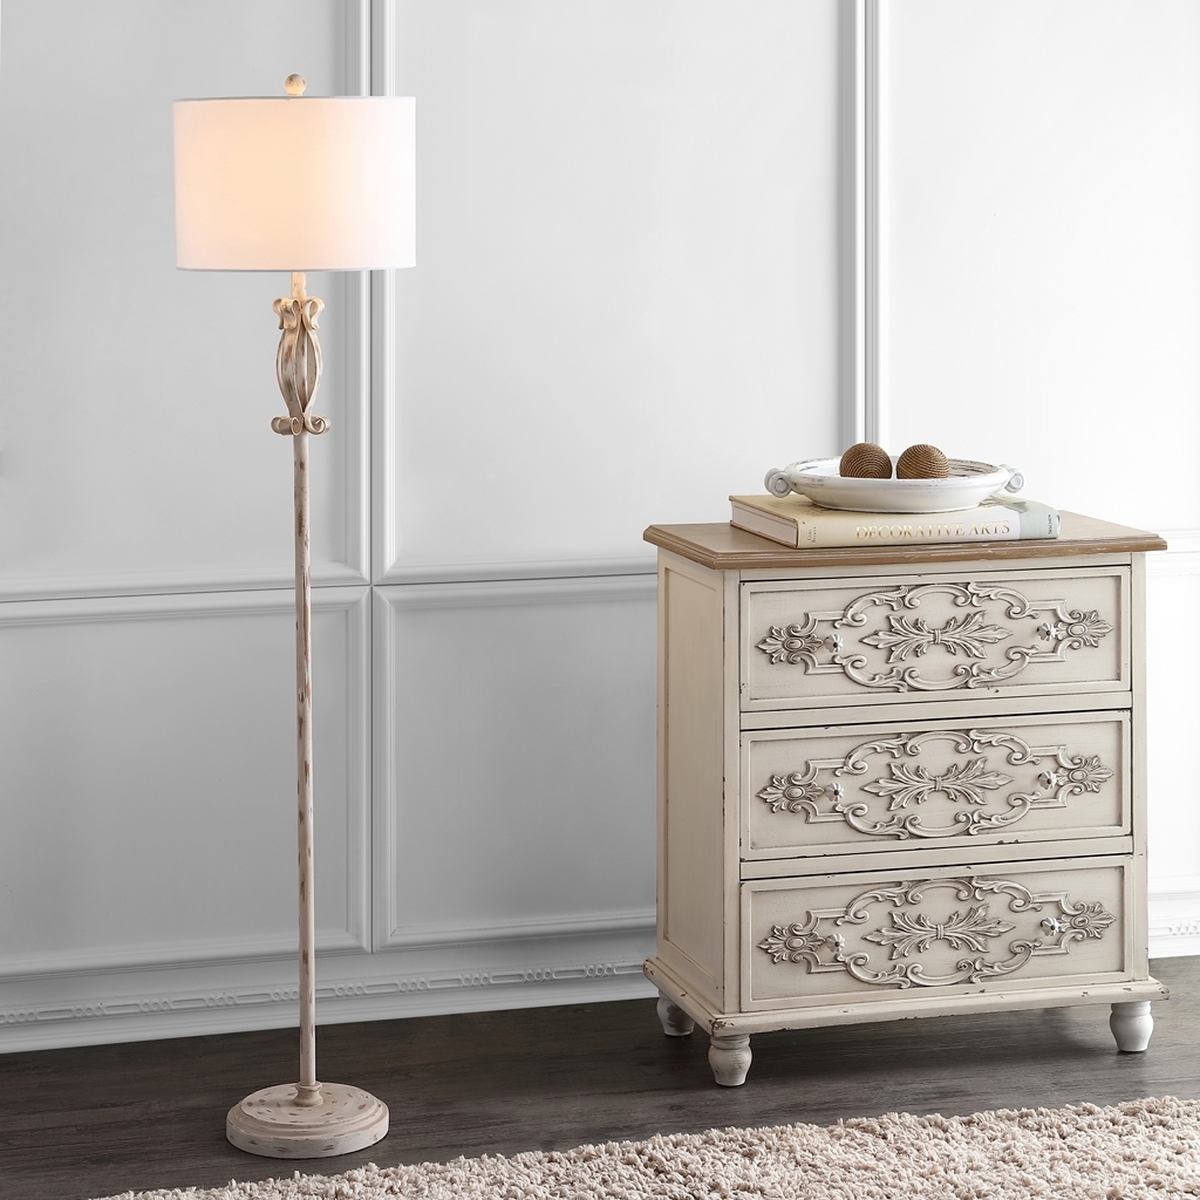 Philippa Floor Lamp - White Washed - Arlo Home - Image 3